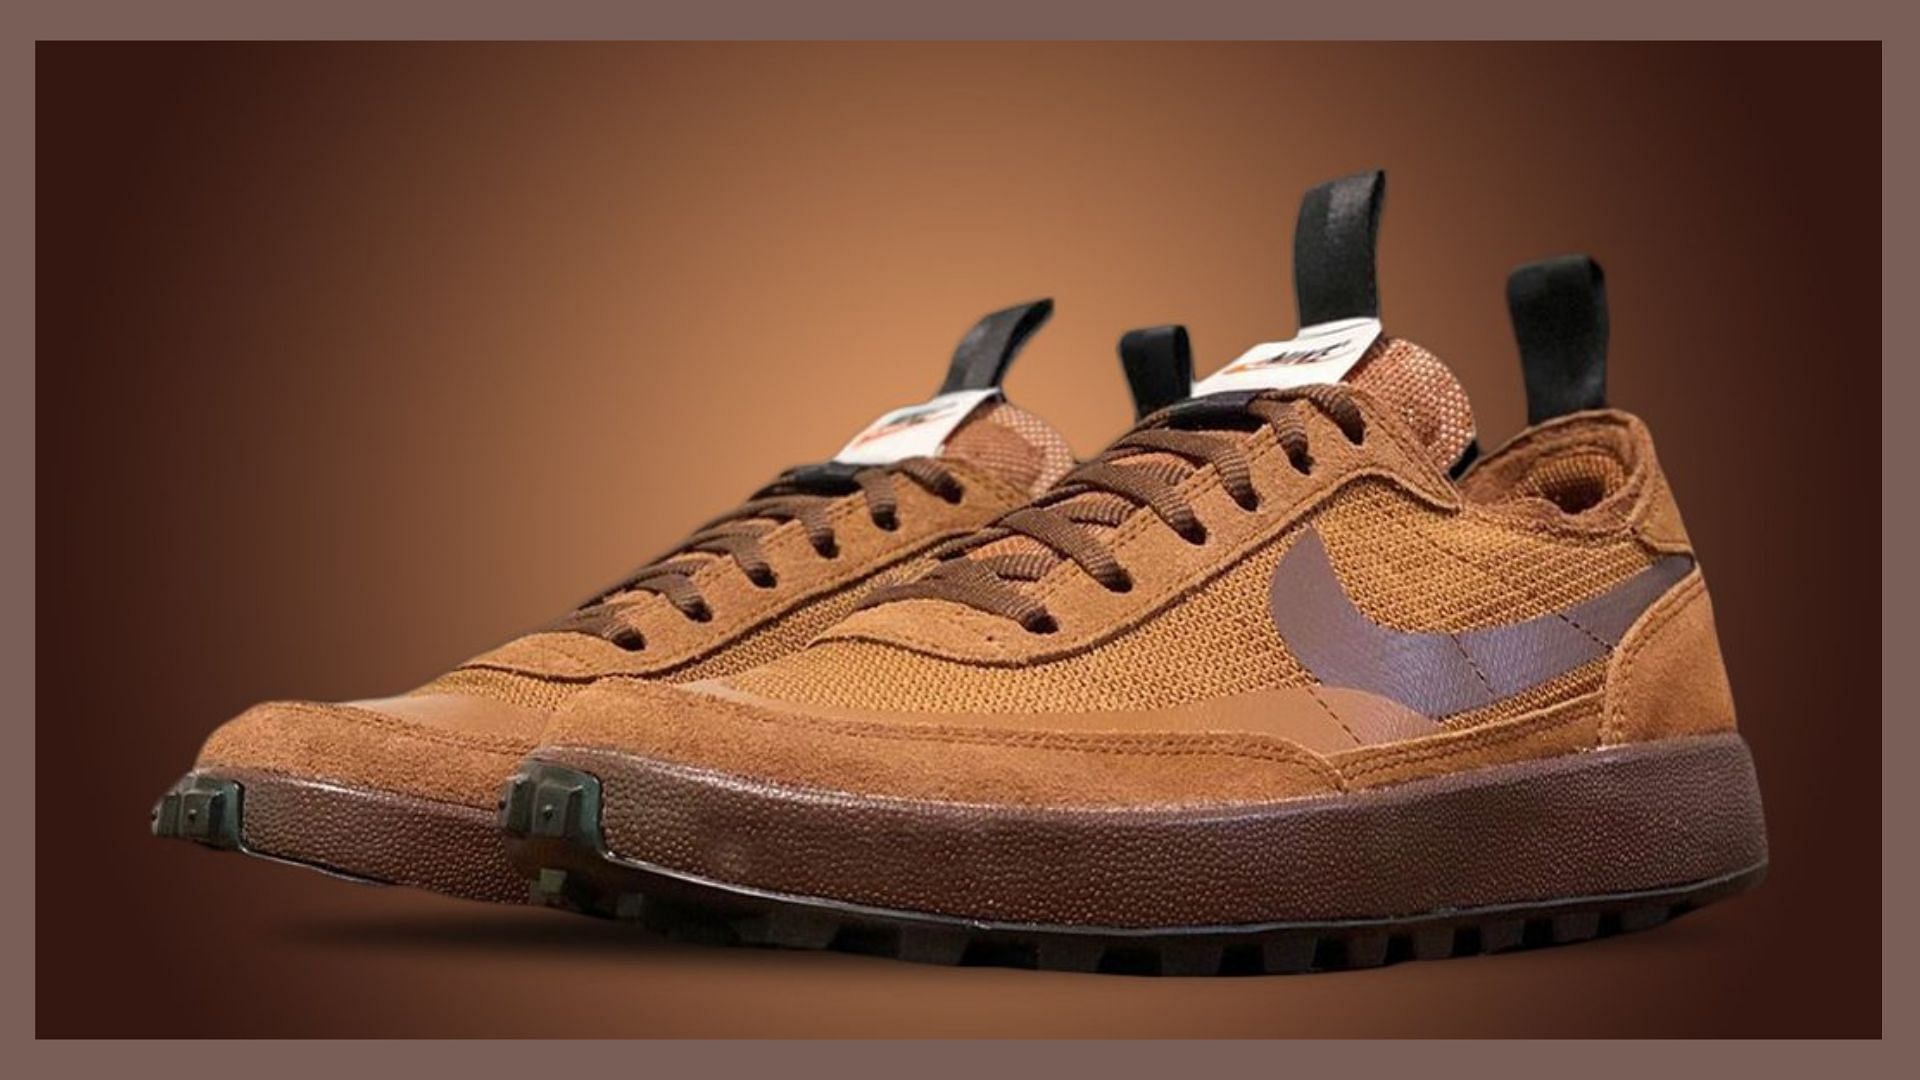 Tom Sachs x NikeCraft General Purpose Shoe Brown colorway (Image via Twitter/@soleretriever)